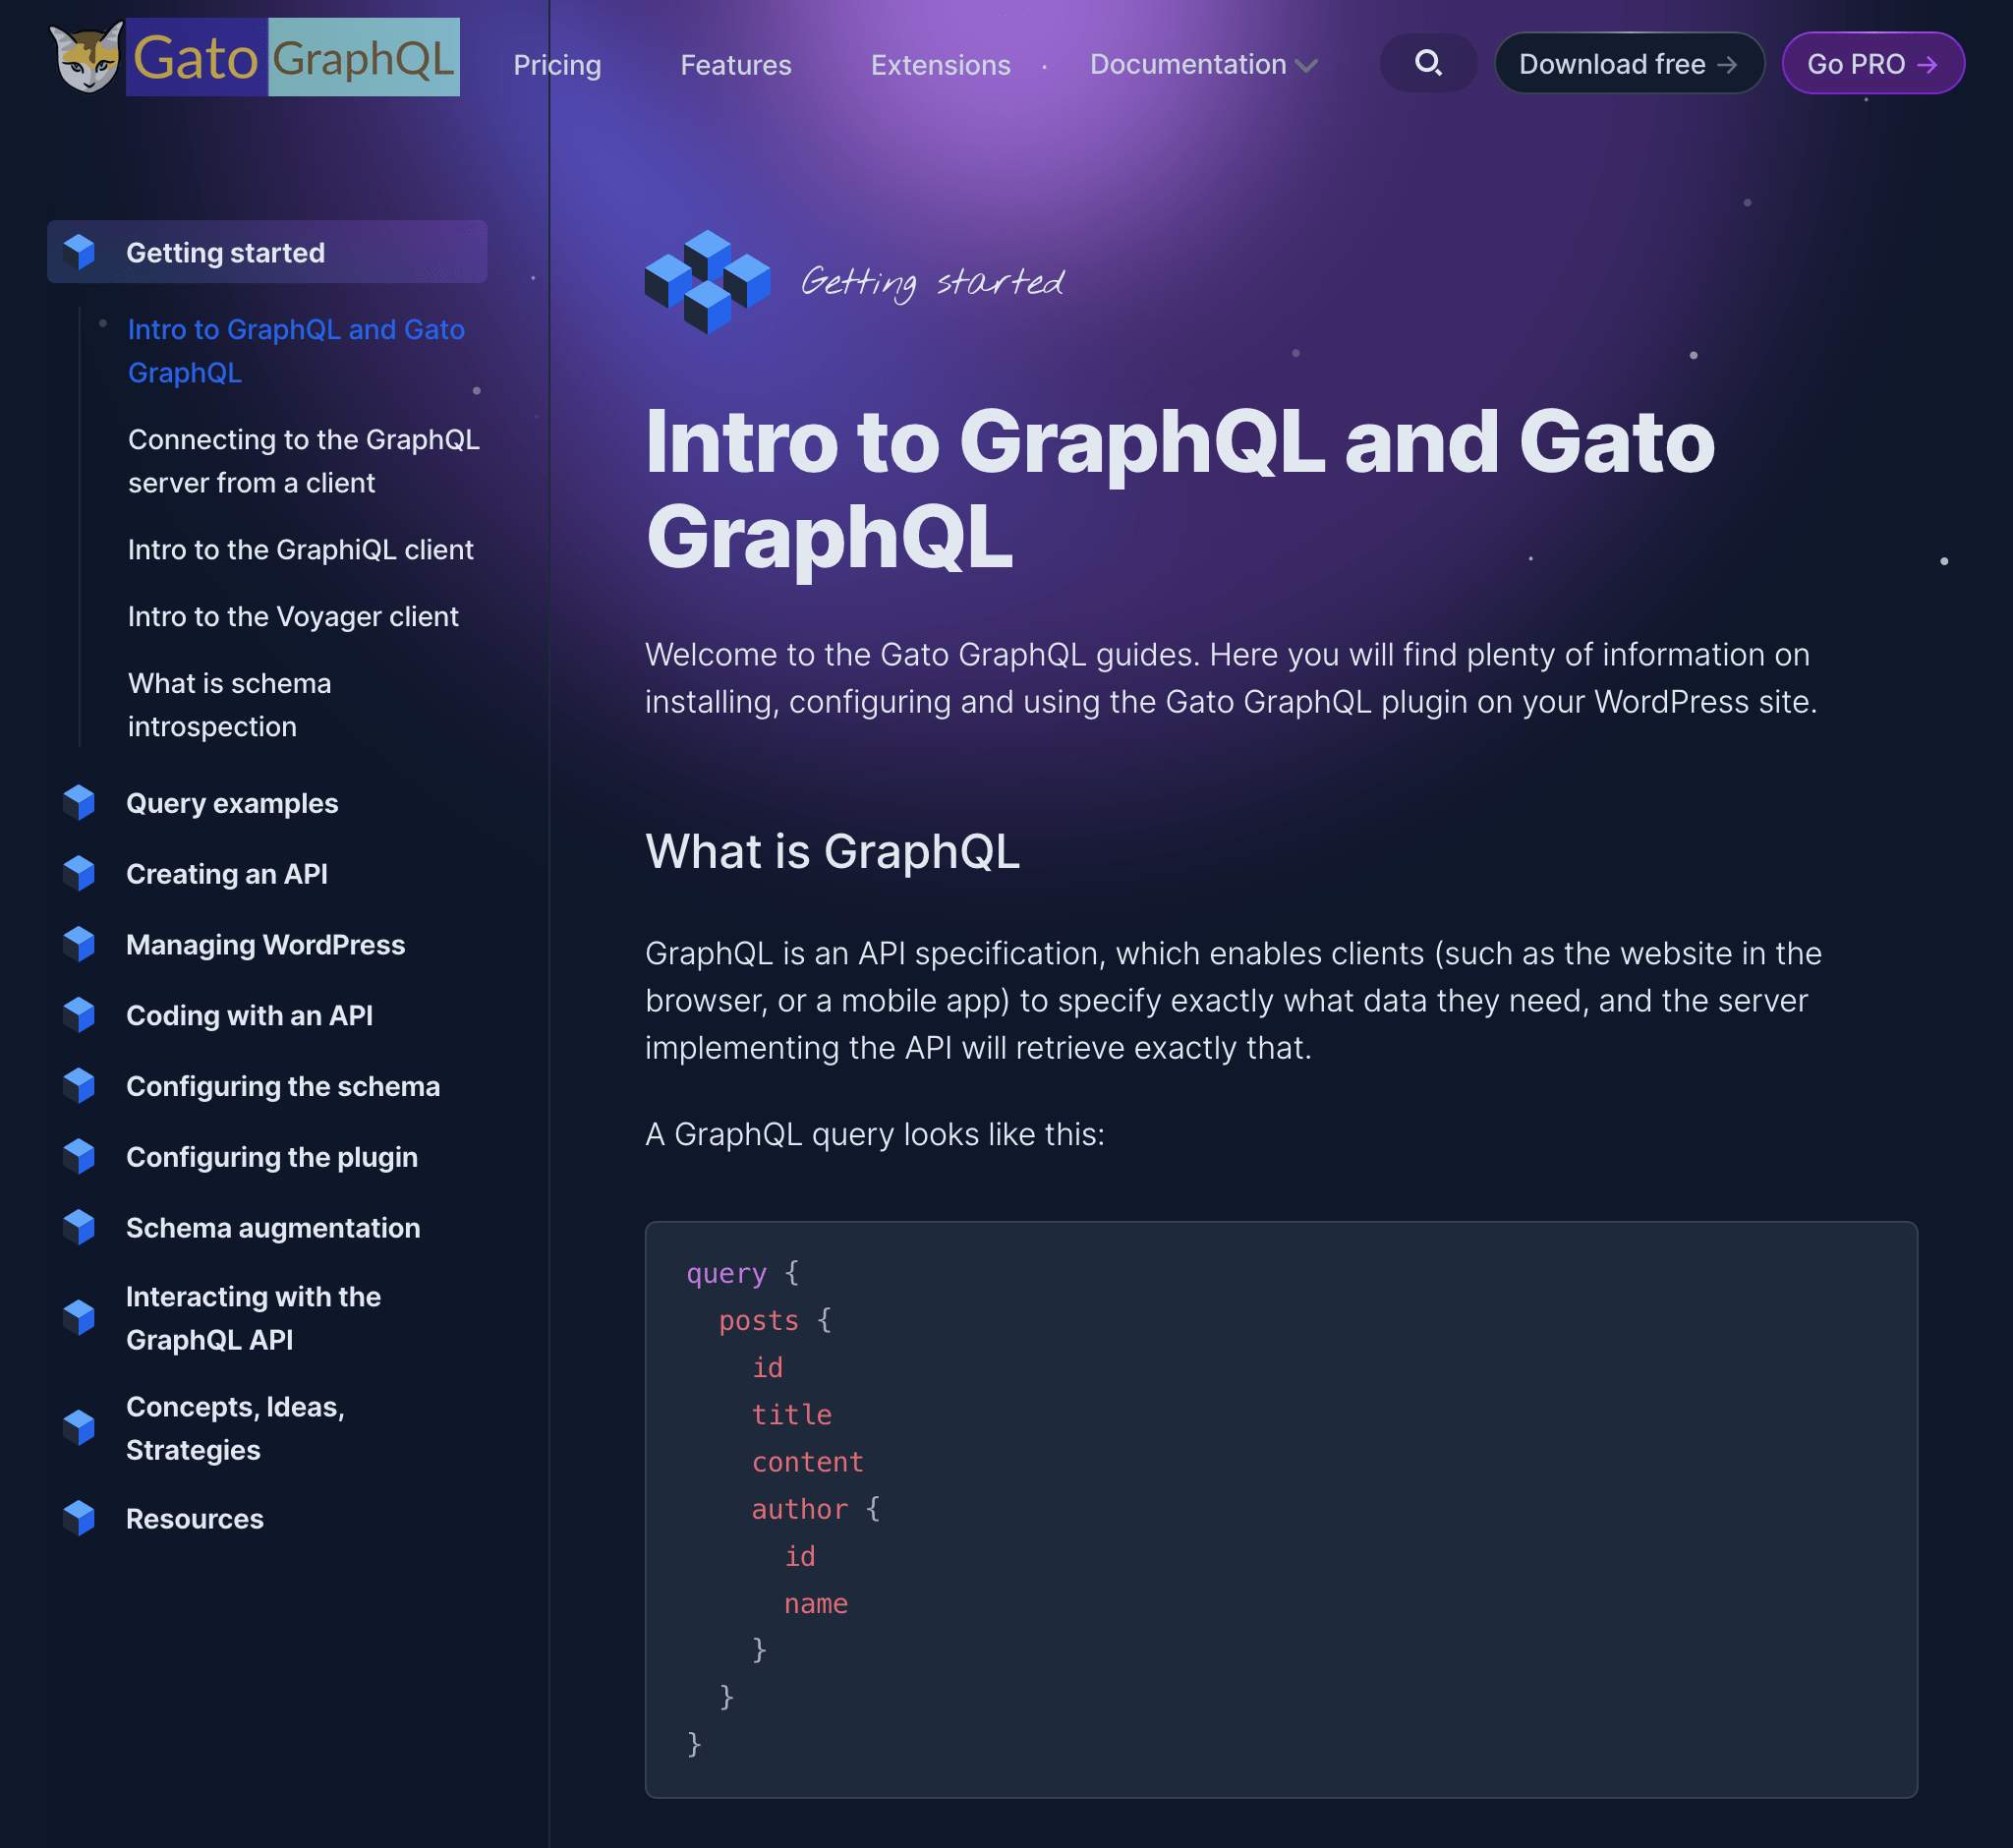 Documentation in Gato GraphQL's new website